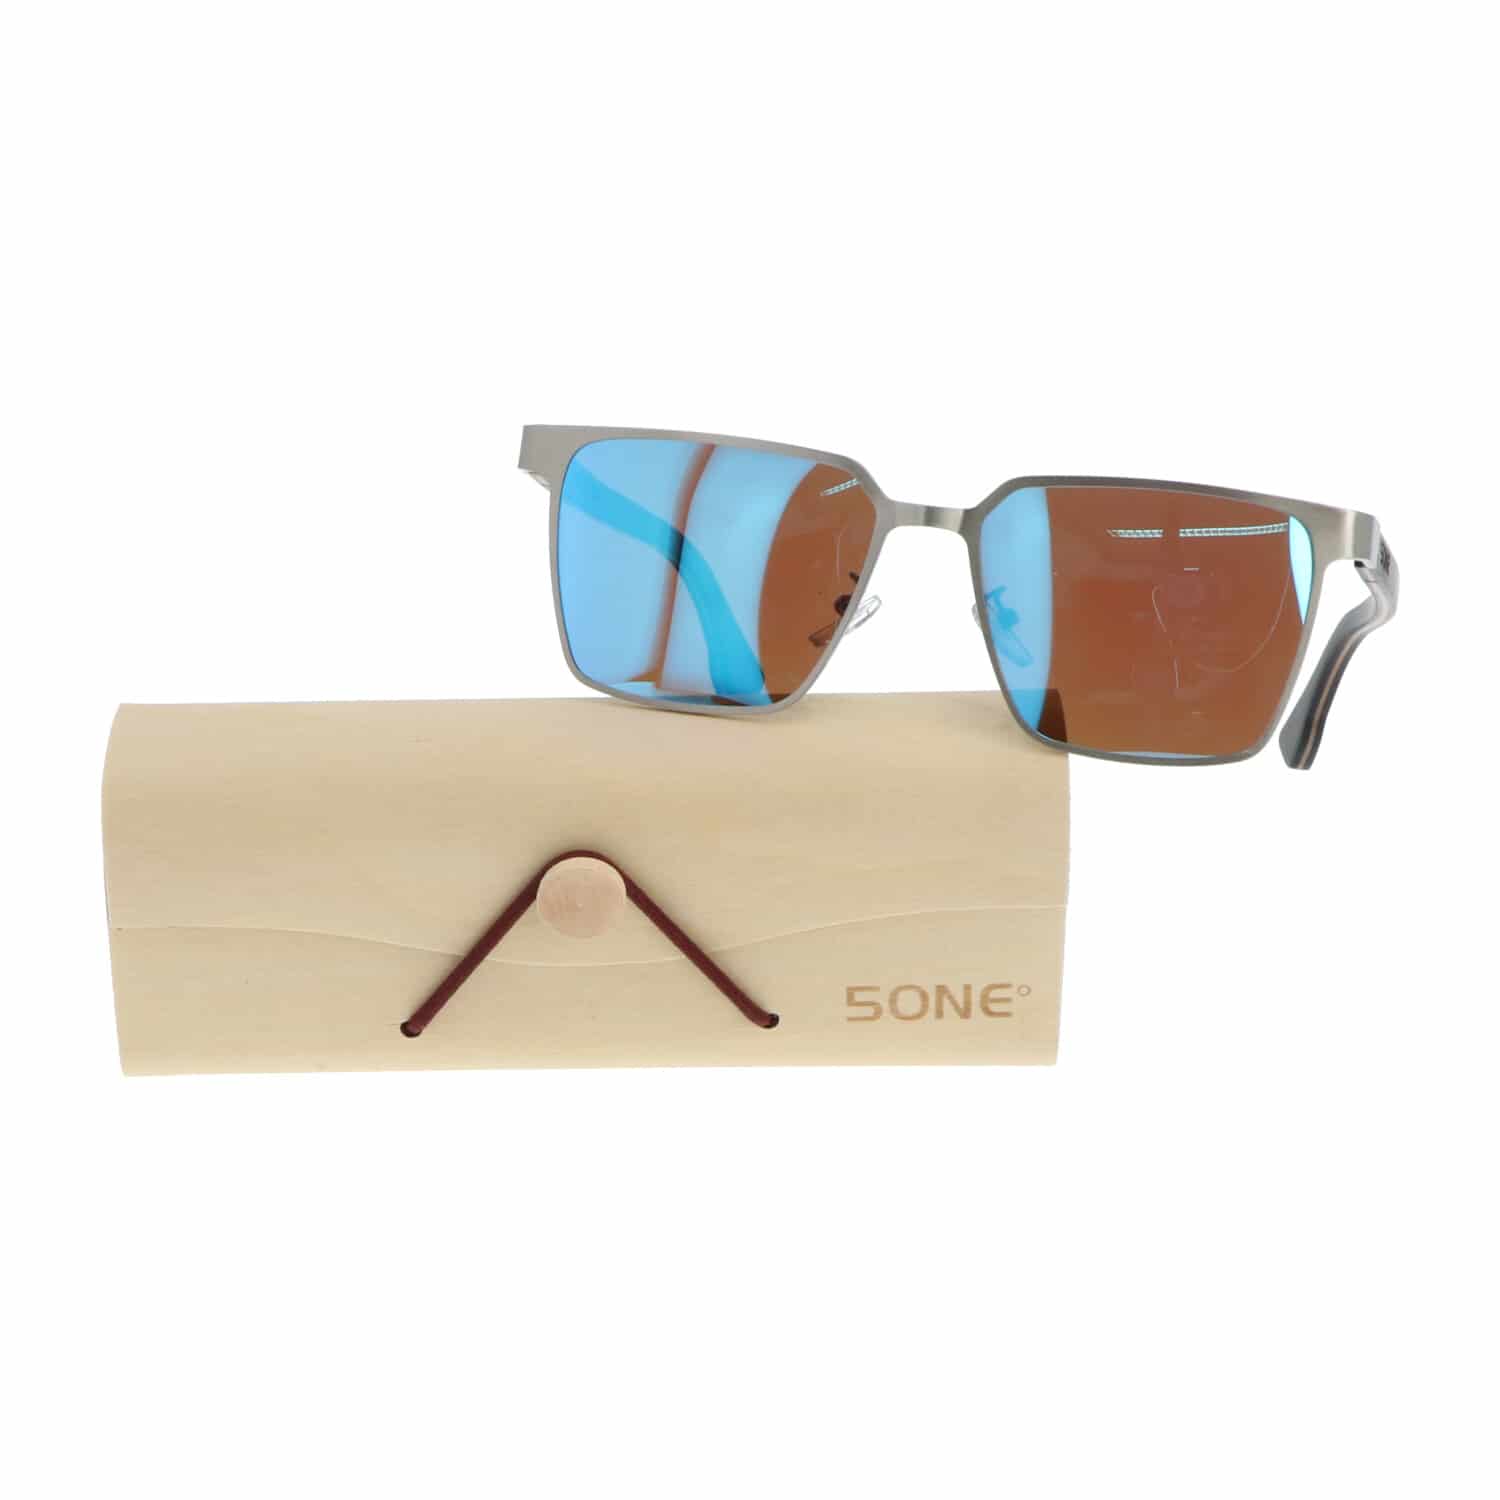 5one® Napoli Square Blue - Zonnebril met houten poten - spiegelglas